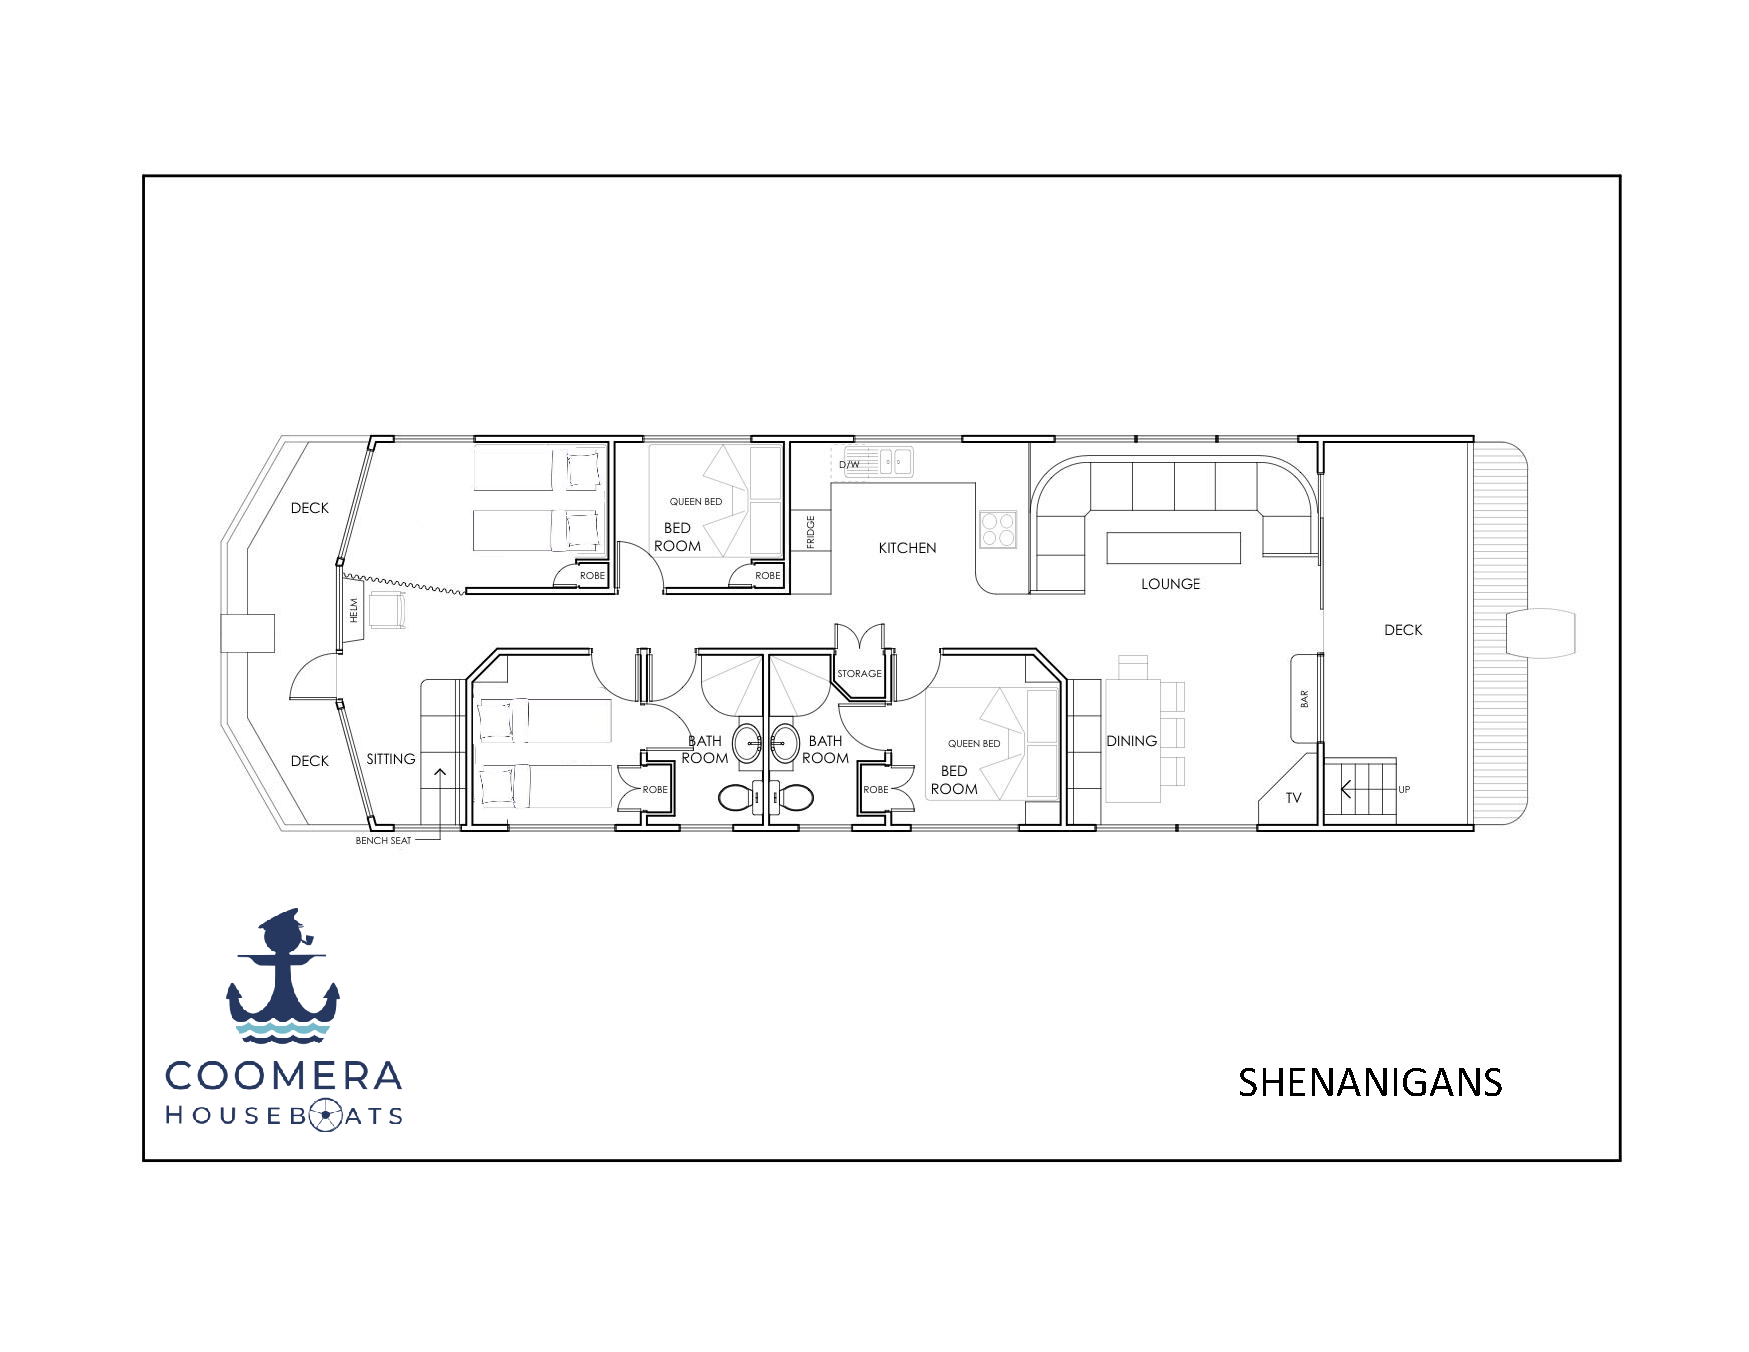 Shenanigans floor plan 2